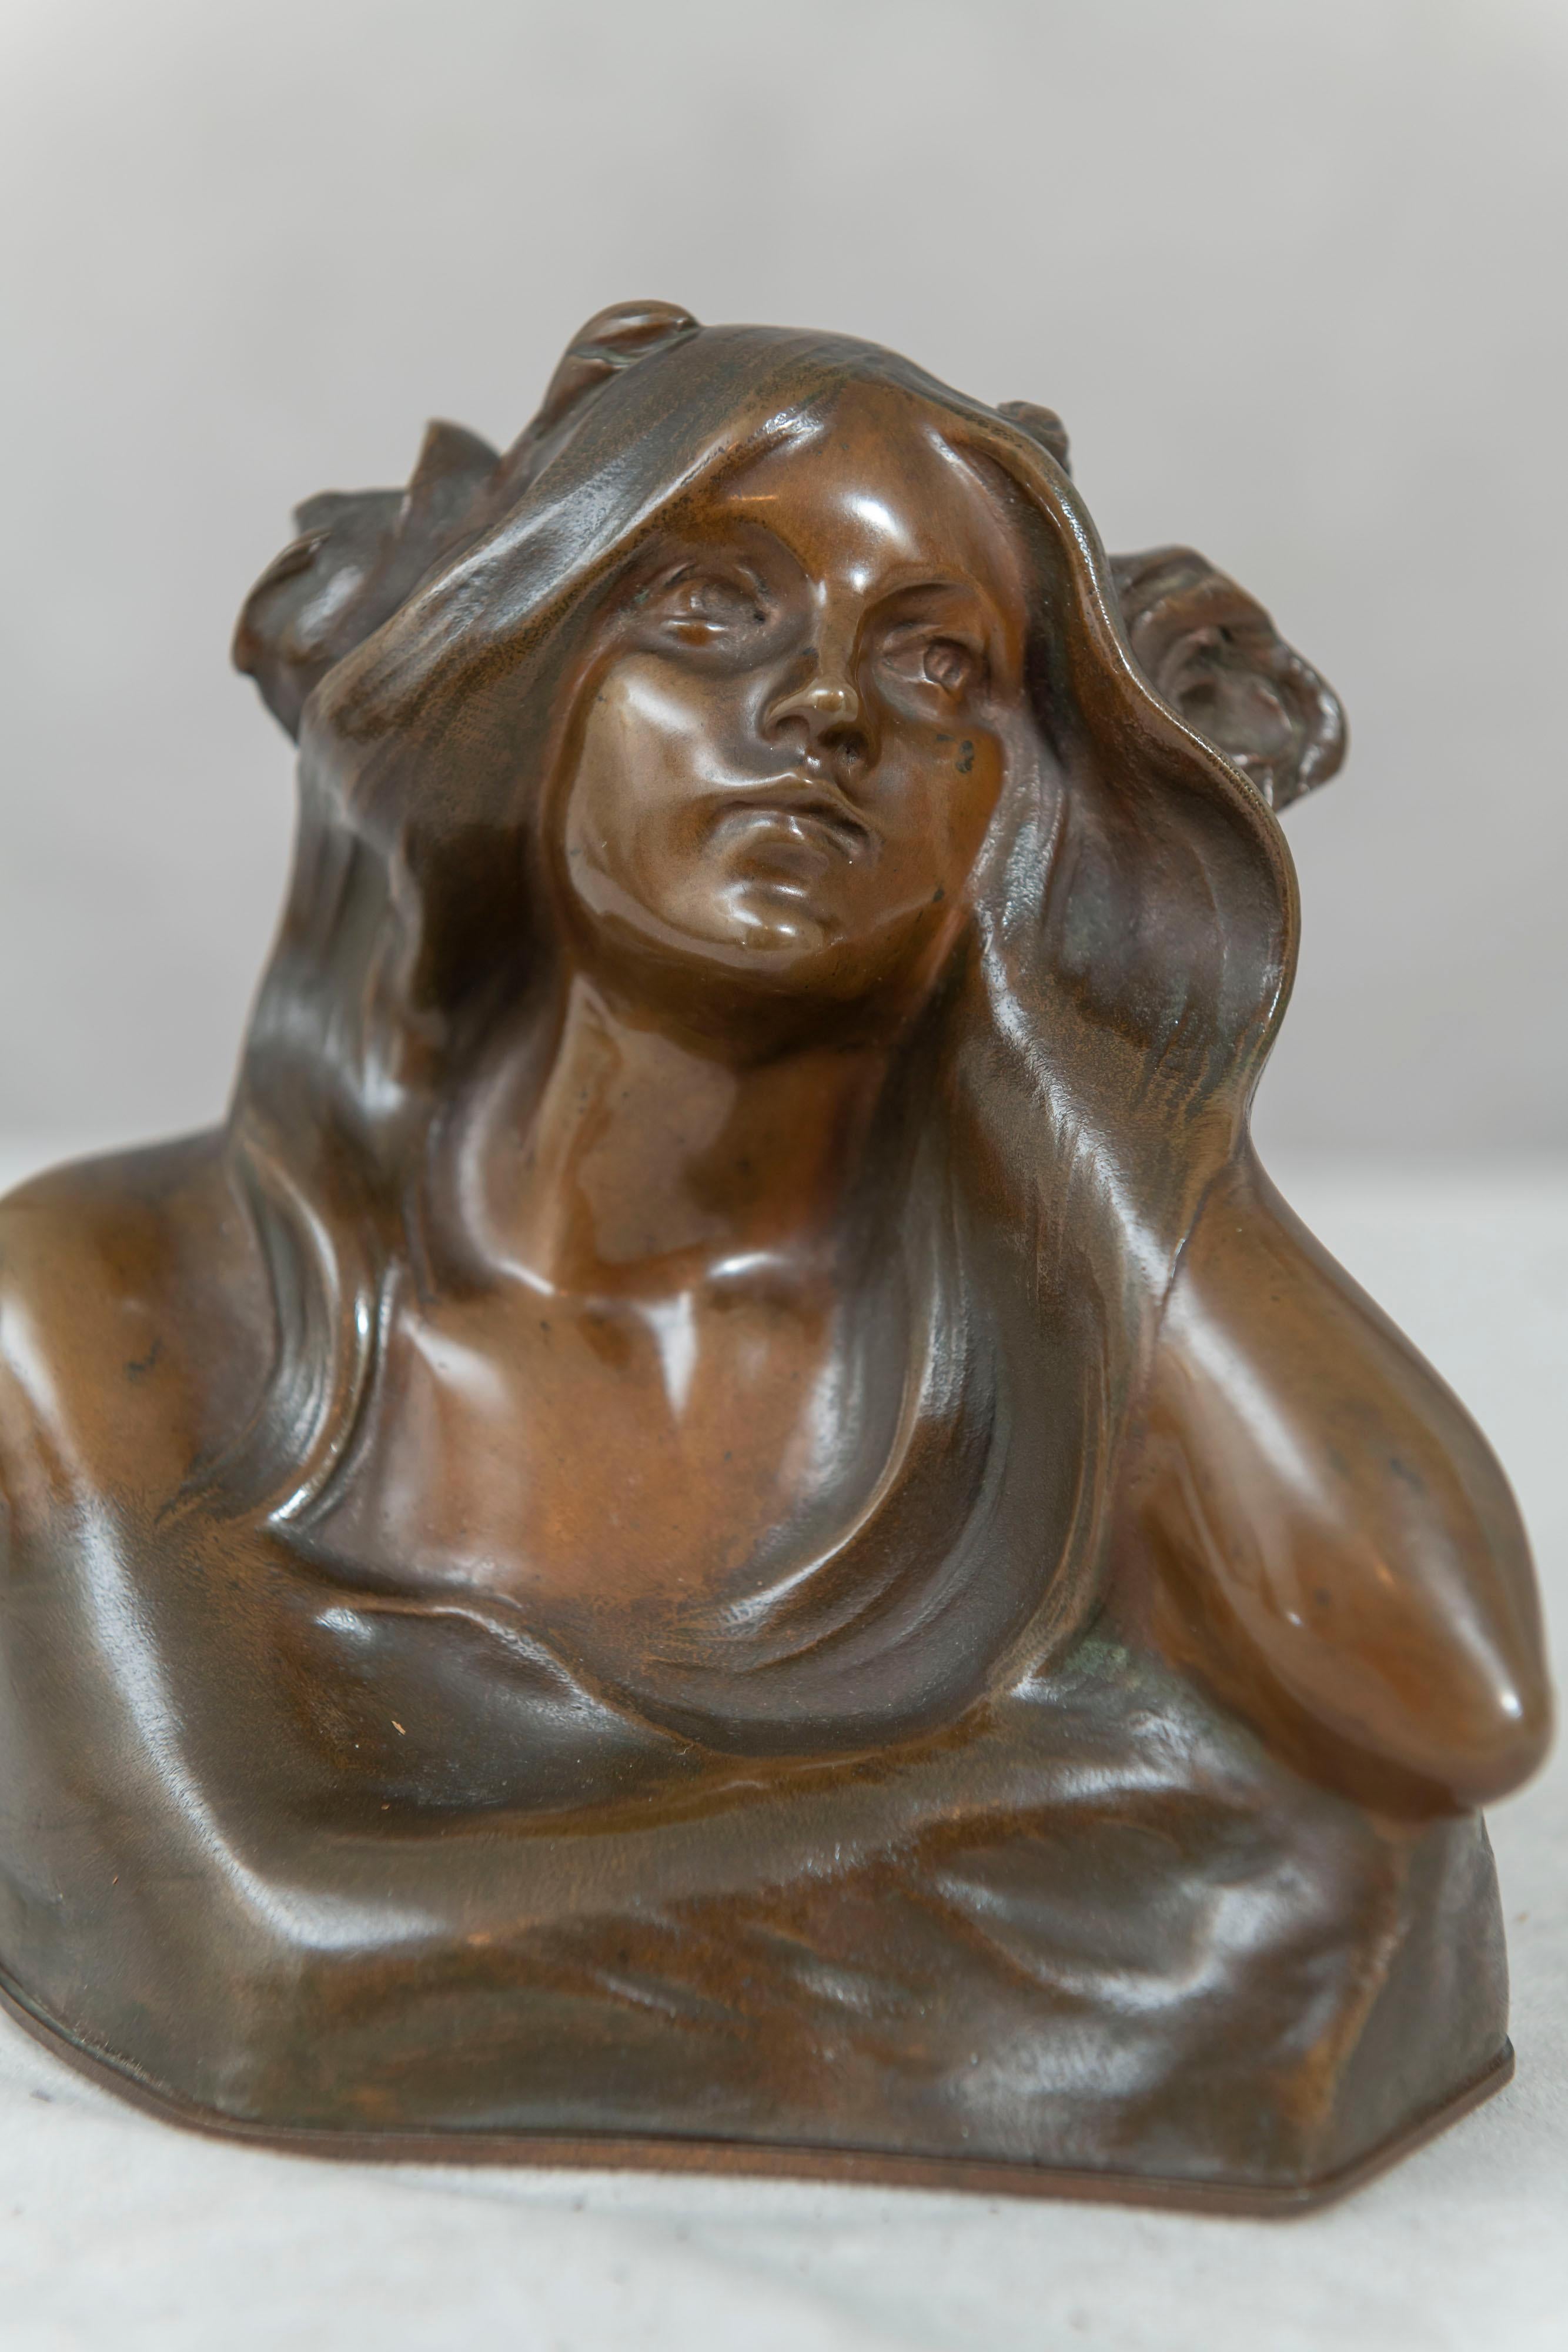 20th Century Art Nouveau Bust of a Young Beauty, Artist Signed, Austrian, circa 1910